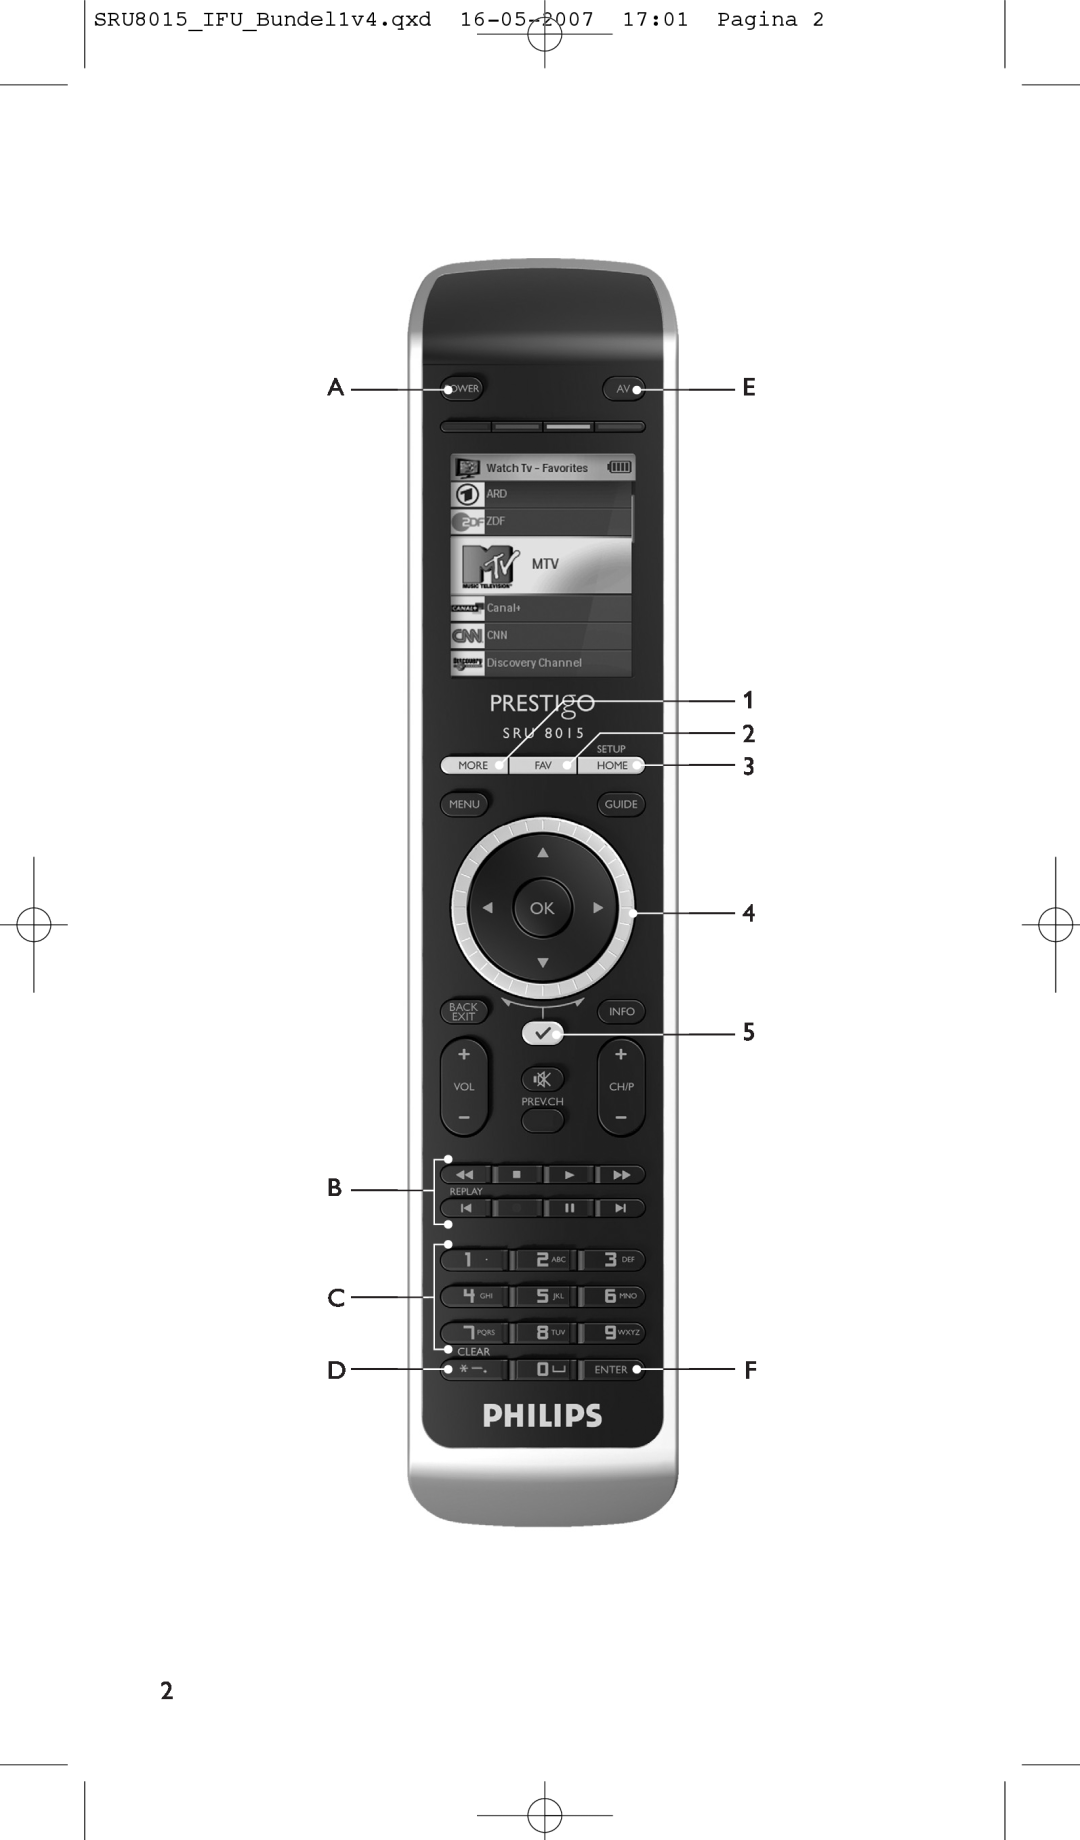 Philips manual A E, SRU8015IFUBundel1v4.qxd 16-05-2007 1701 Pagina 